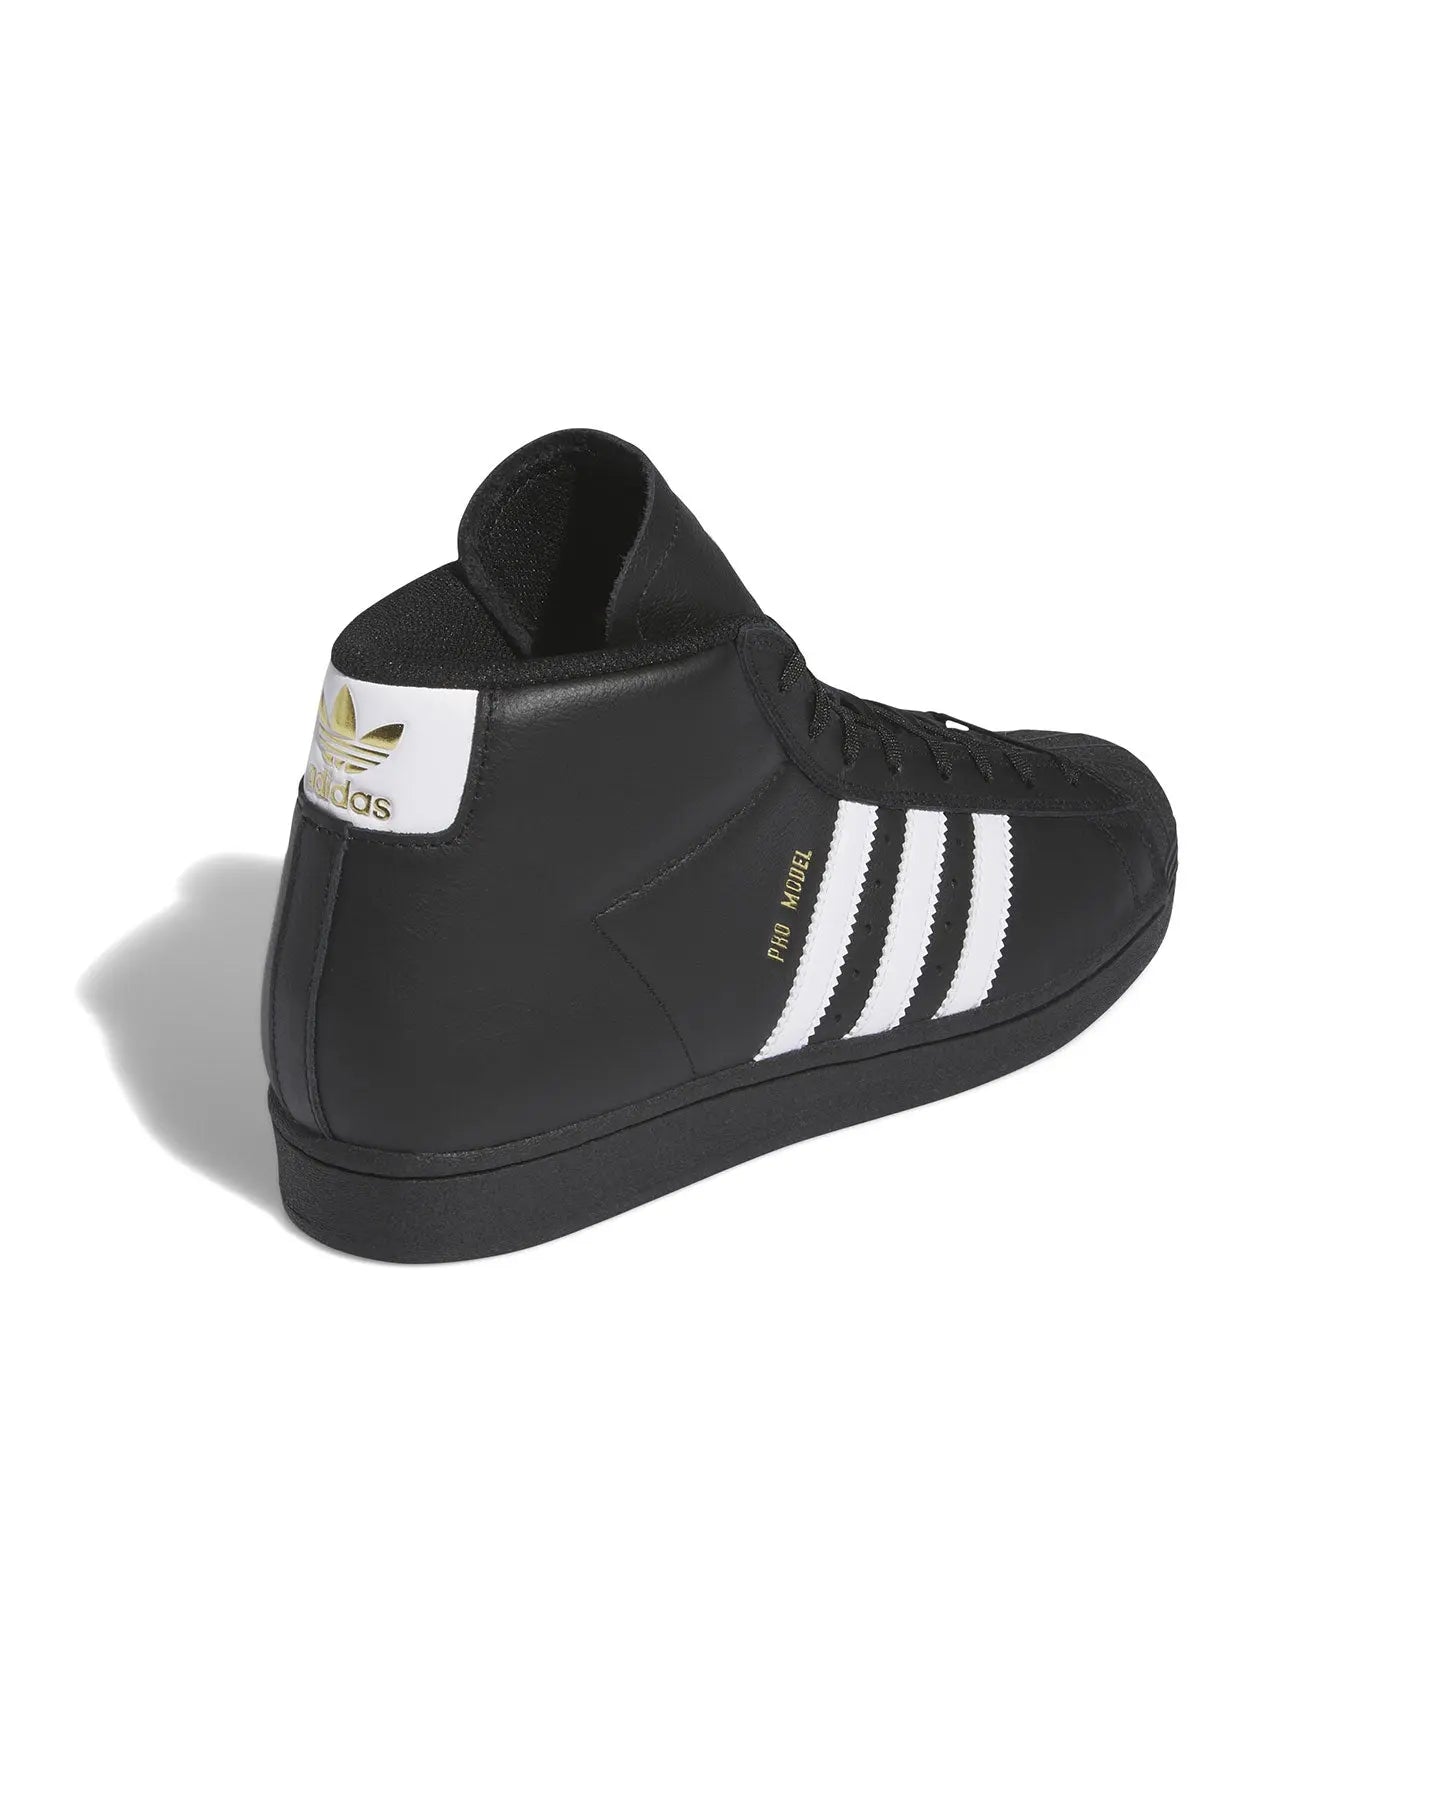 Adidas Pro Model ADV - Black / White / Gold Footwear